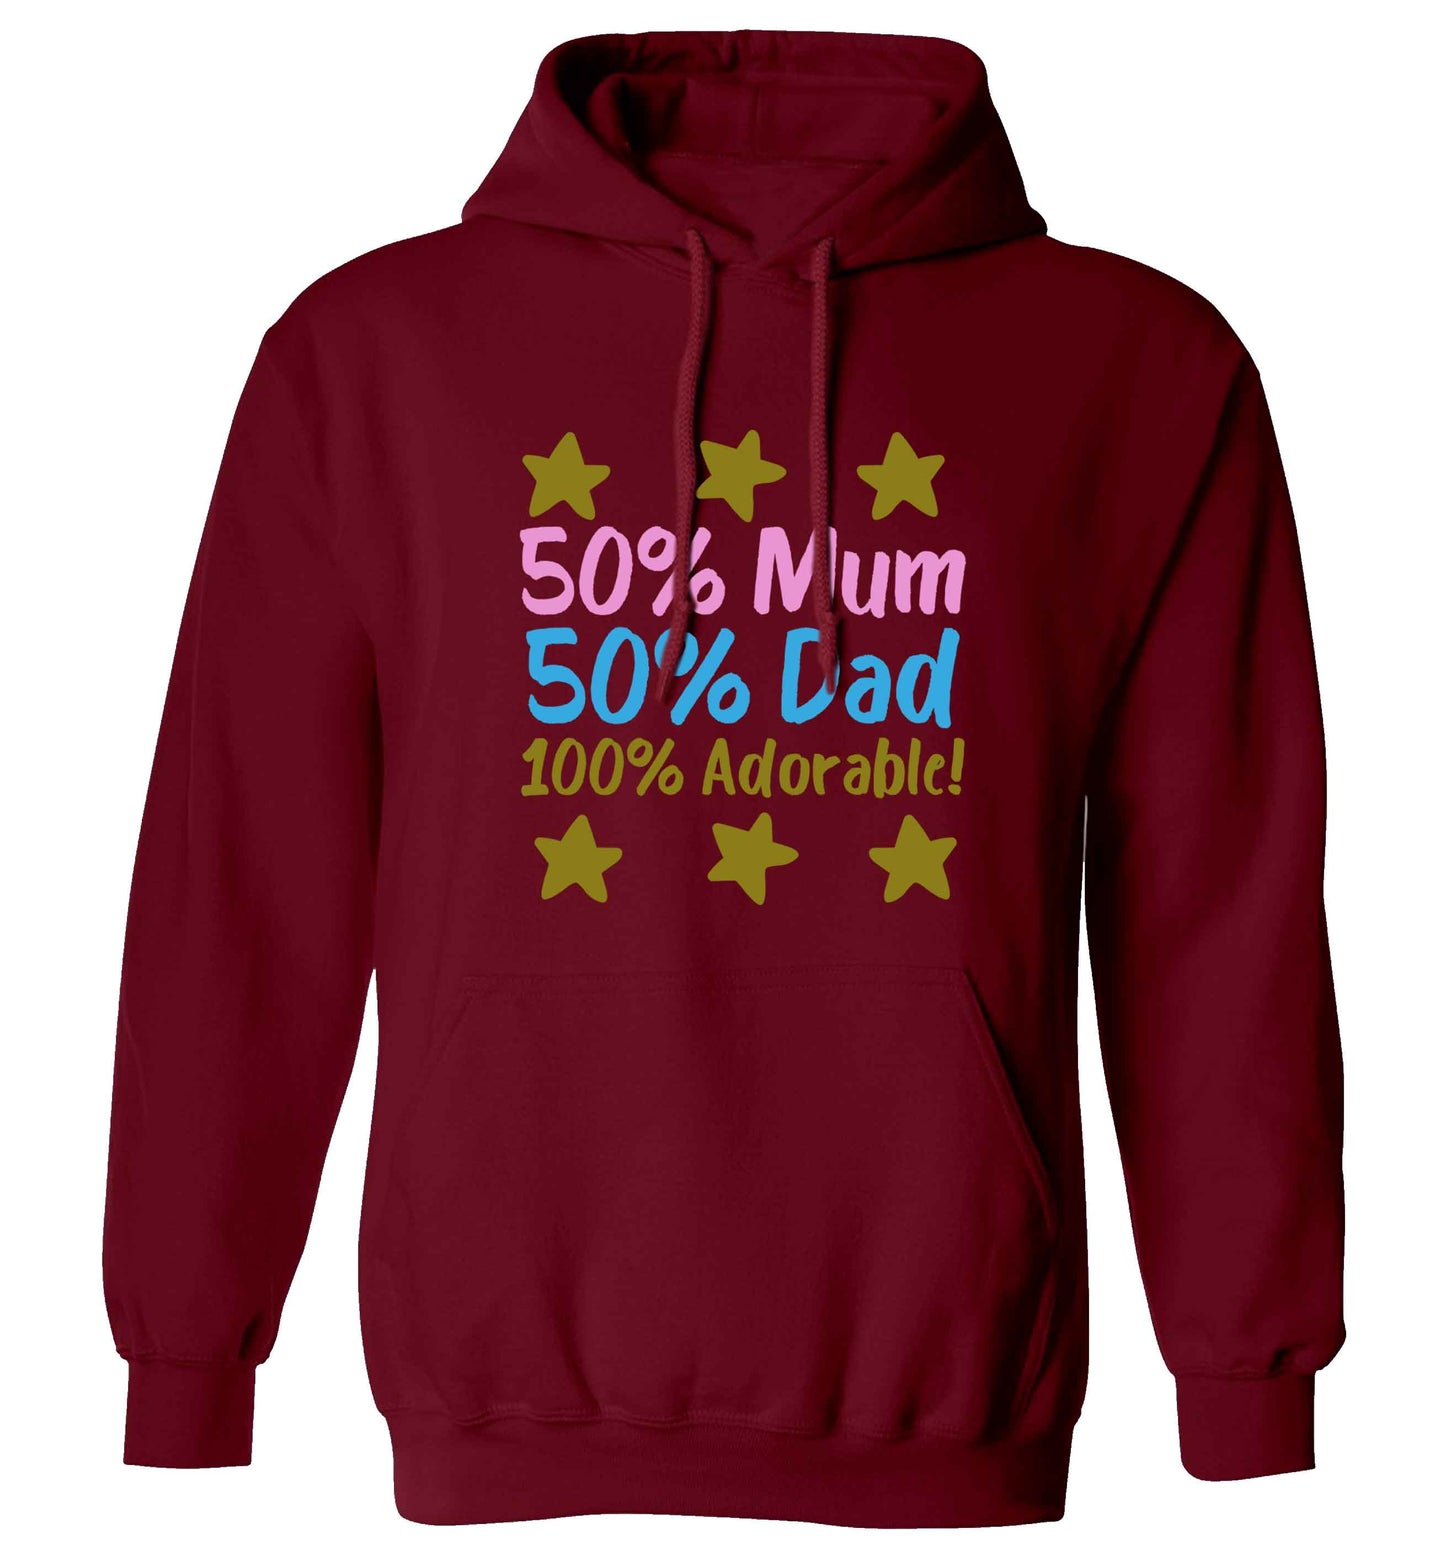 50% mum 50% dad 100% adorable adults unisex maroon hoodie 2XL